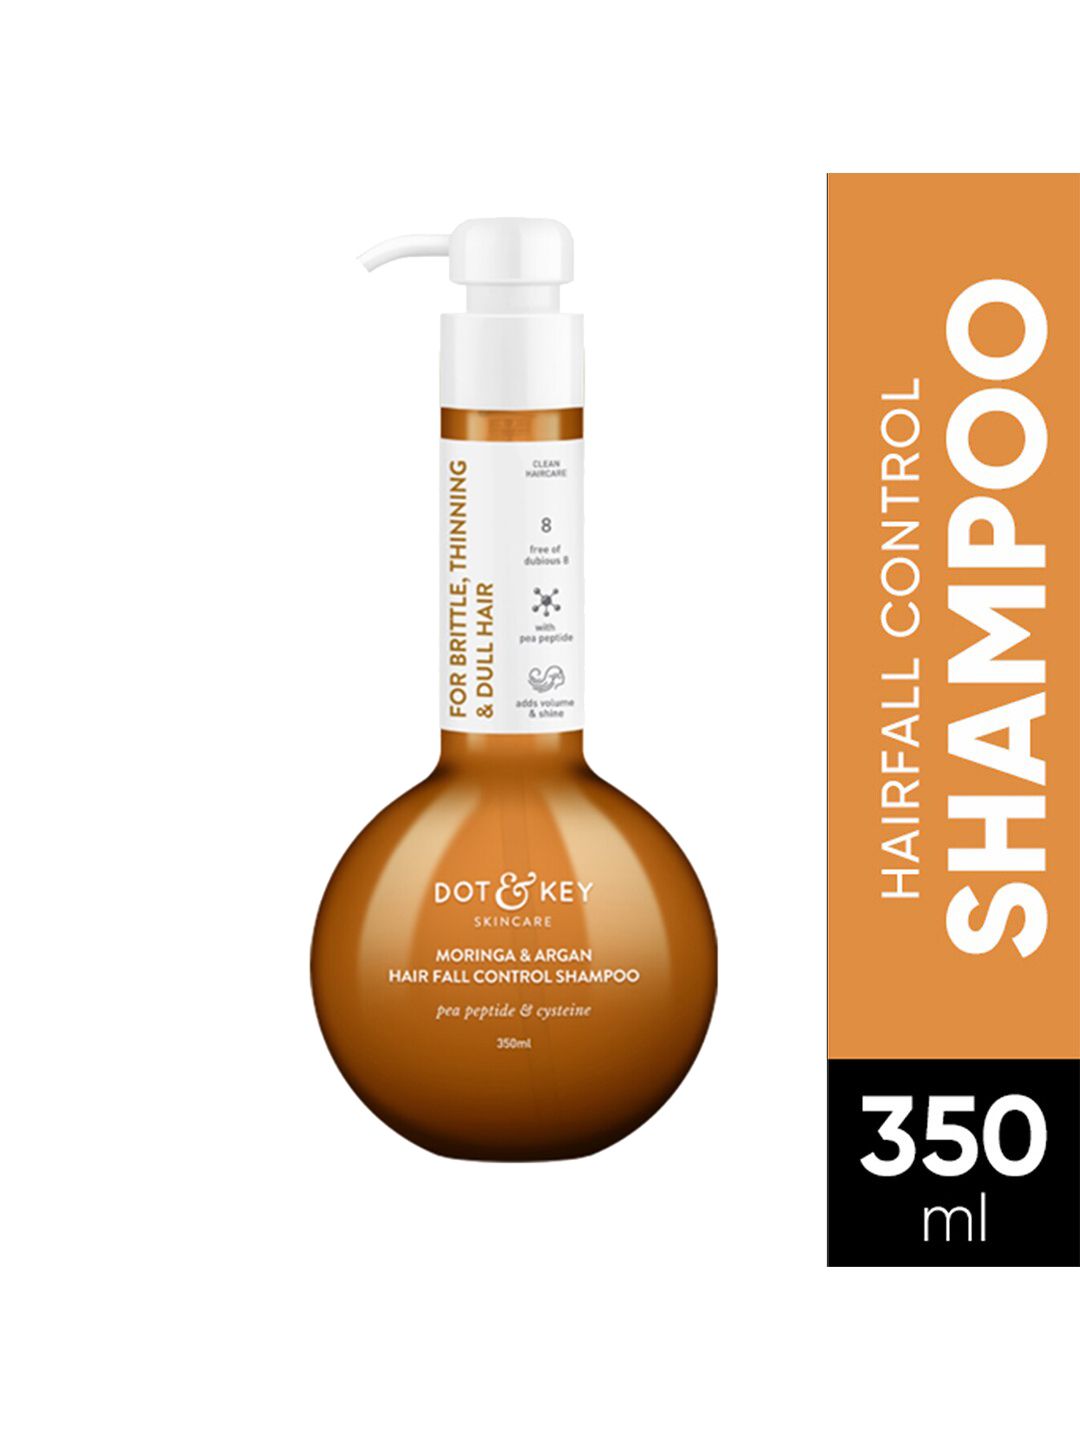 DOT & KEY Argan Oil Hairfall Control Shampoo with Moringa & Keratin for Dry Hair - 350 ml Price in India